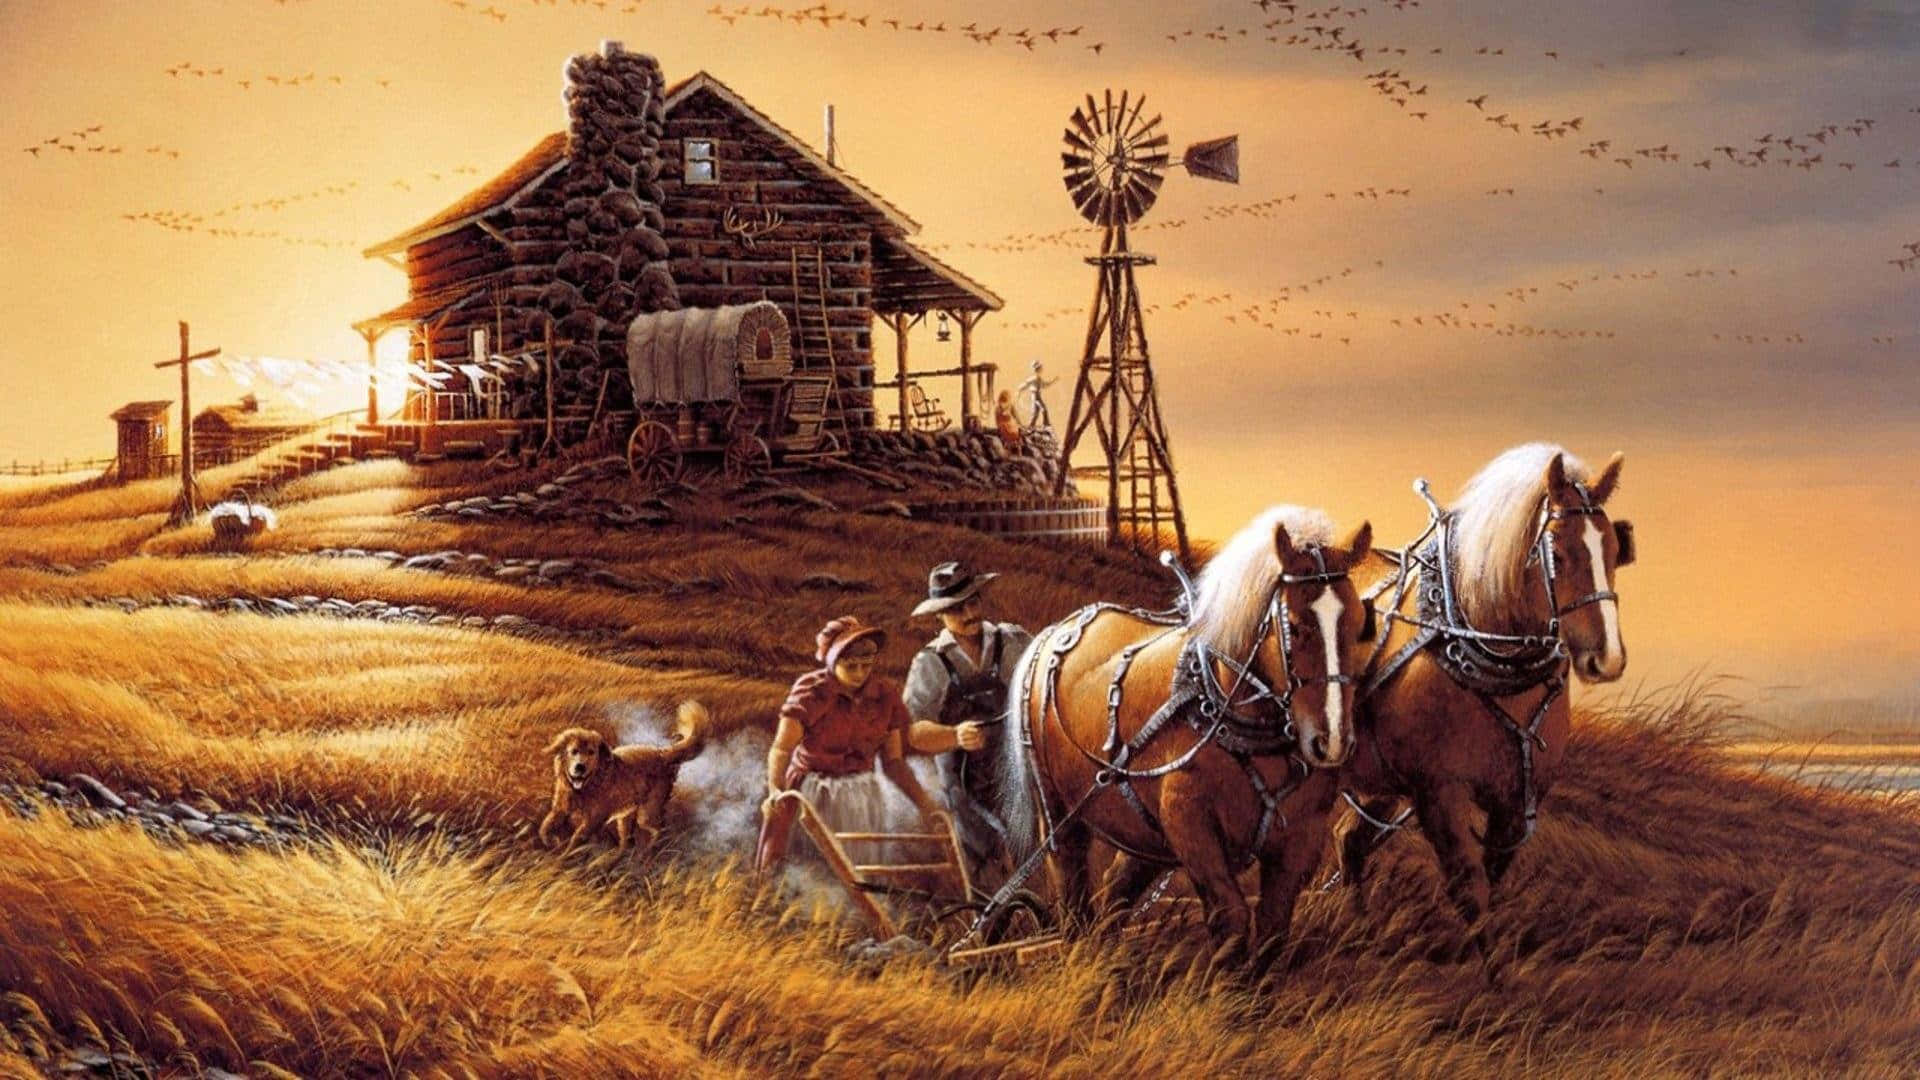 In the Wild West, adventure awaits! Wallpaper